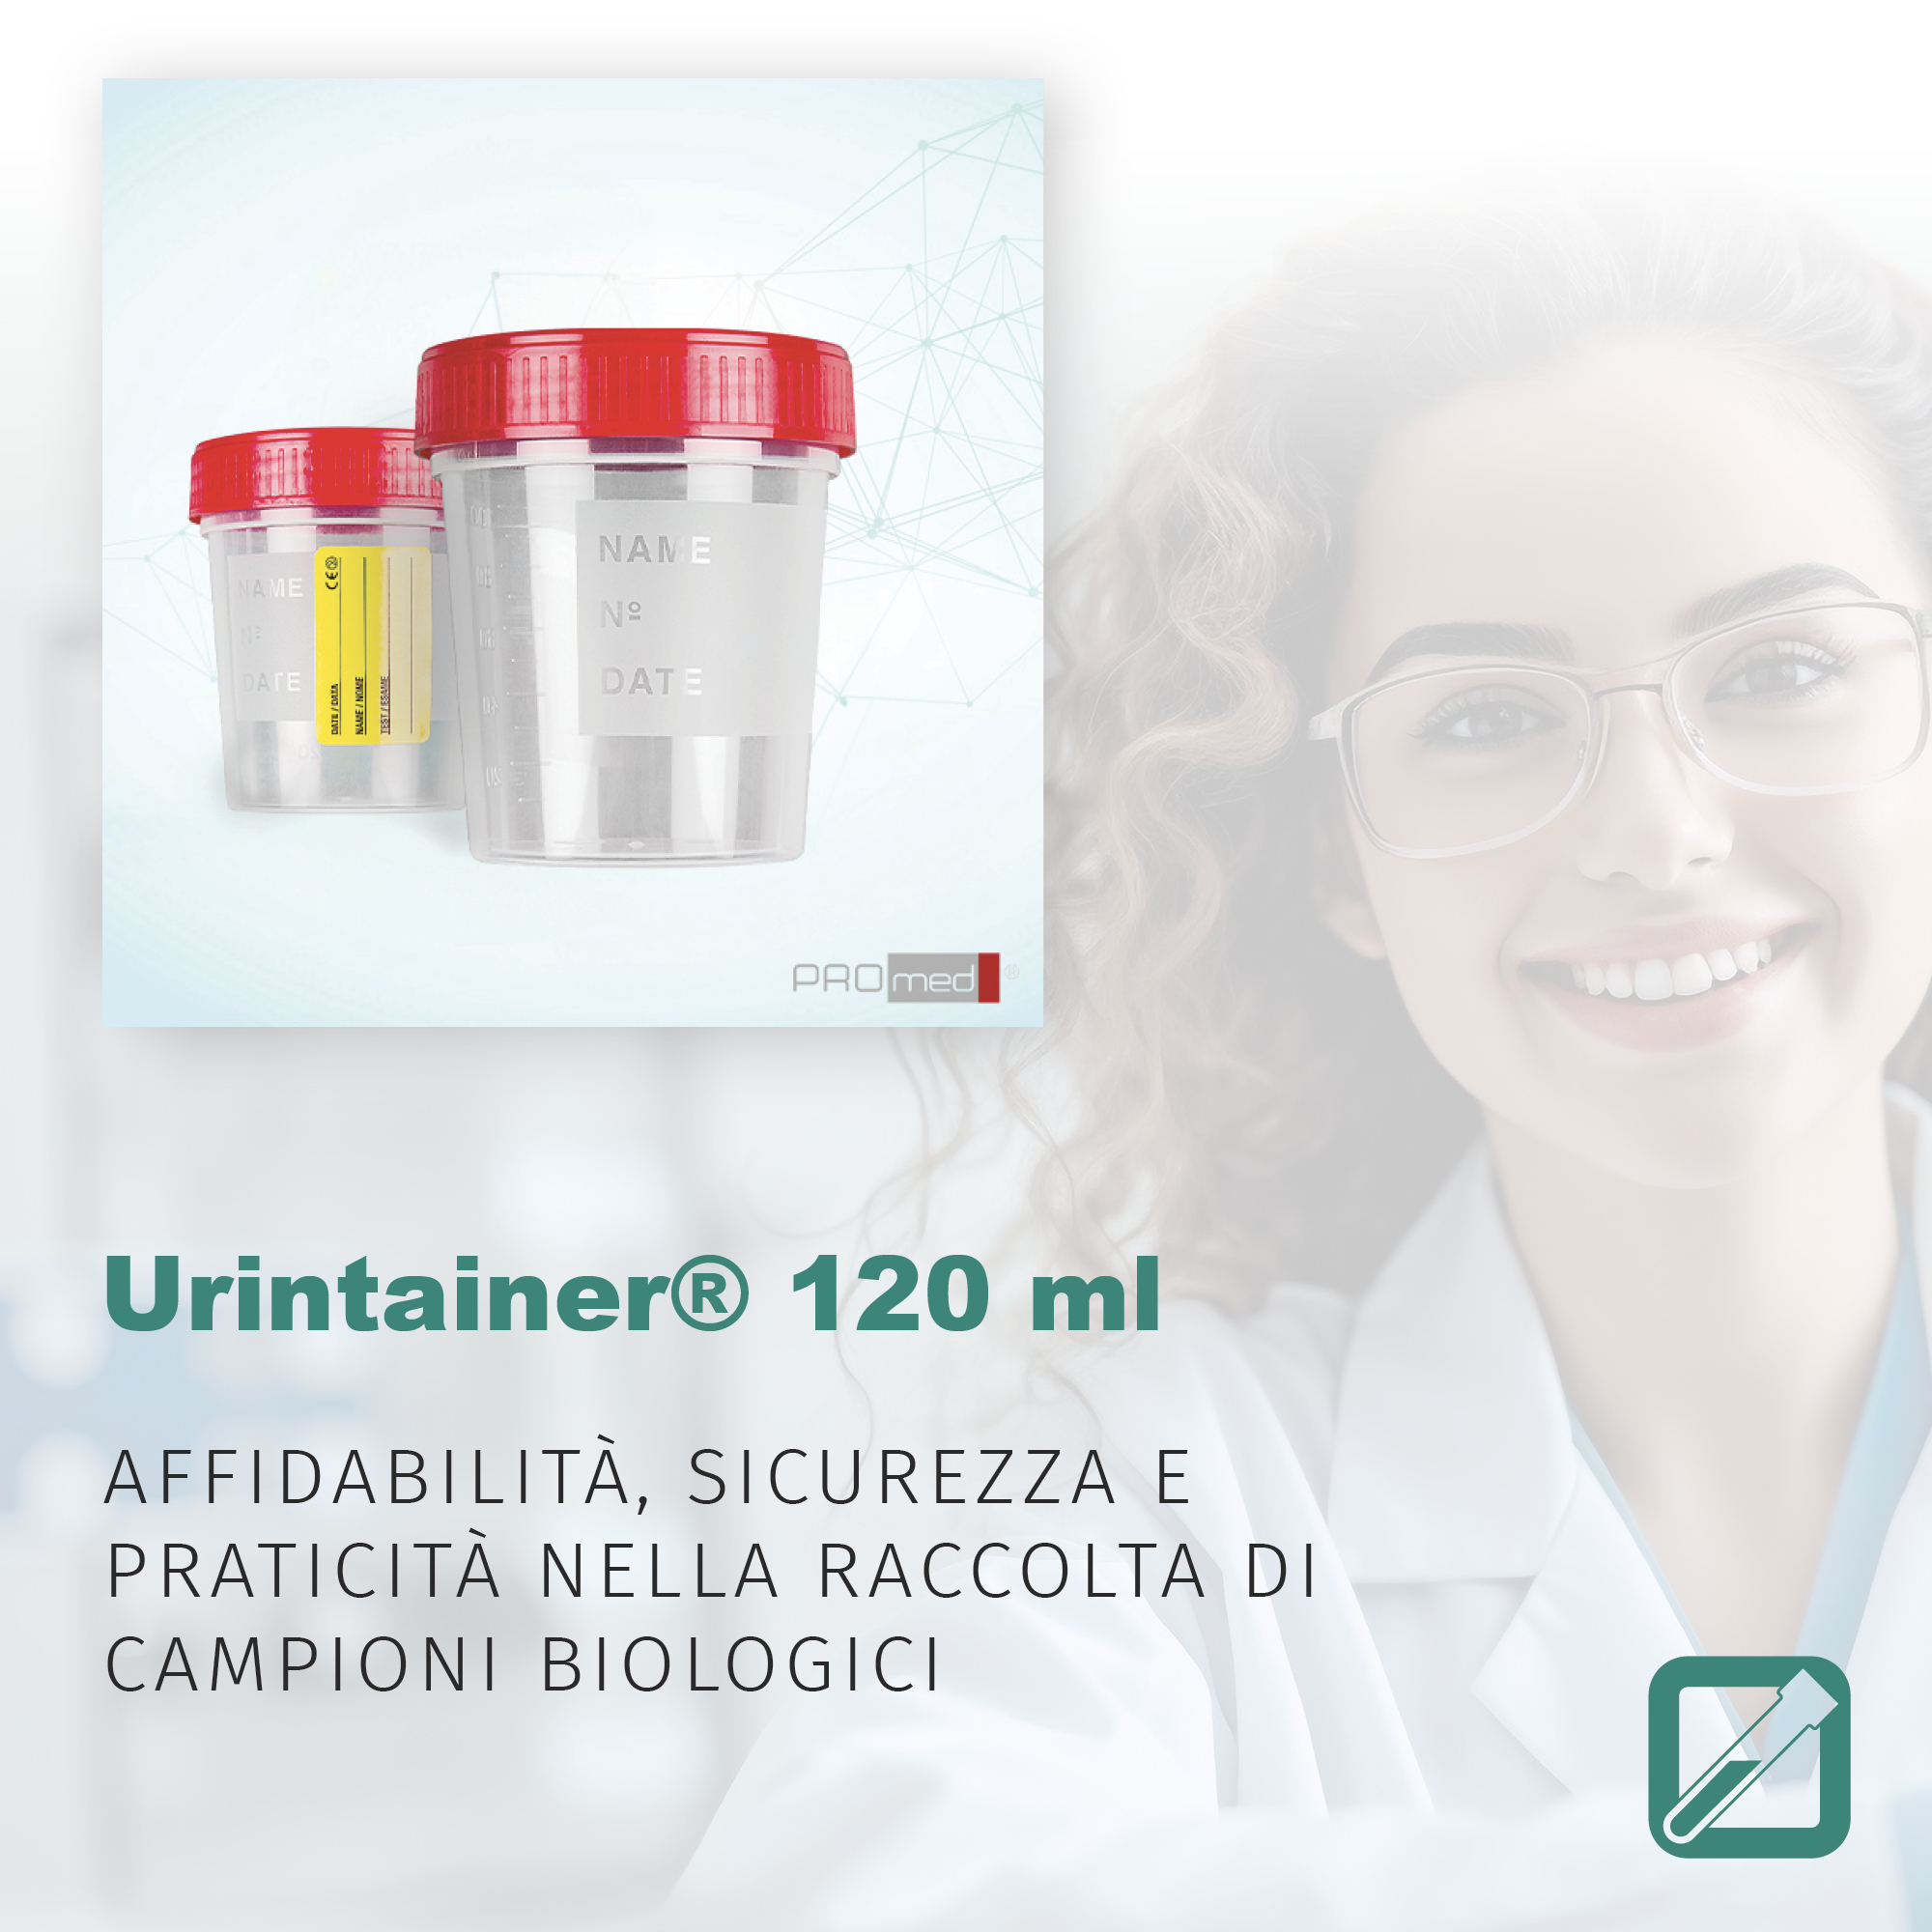 Urintainer® 120ml: affidabilità, sicurezza e praticità nella raccolta dei campioni biologici